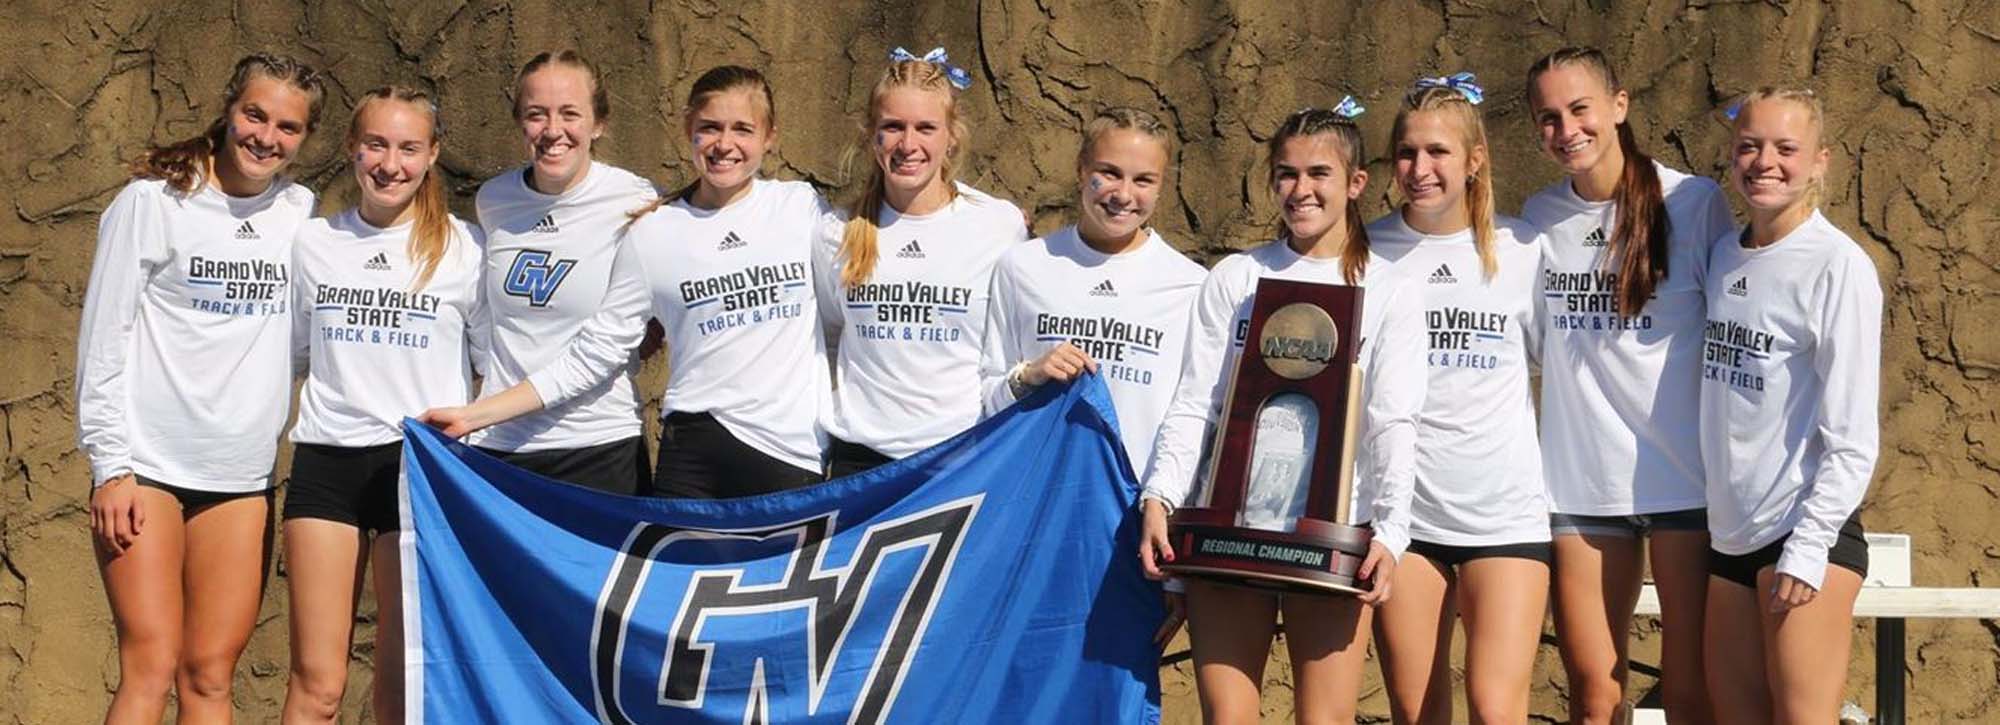 GVSU sweeps NCAA Midwest Regional titles